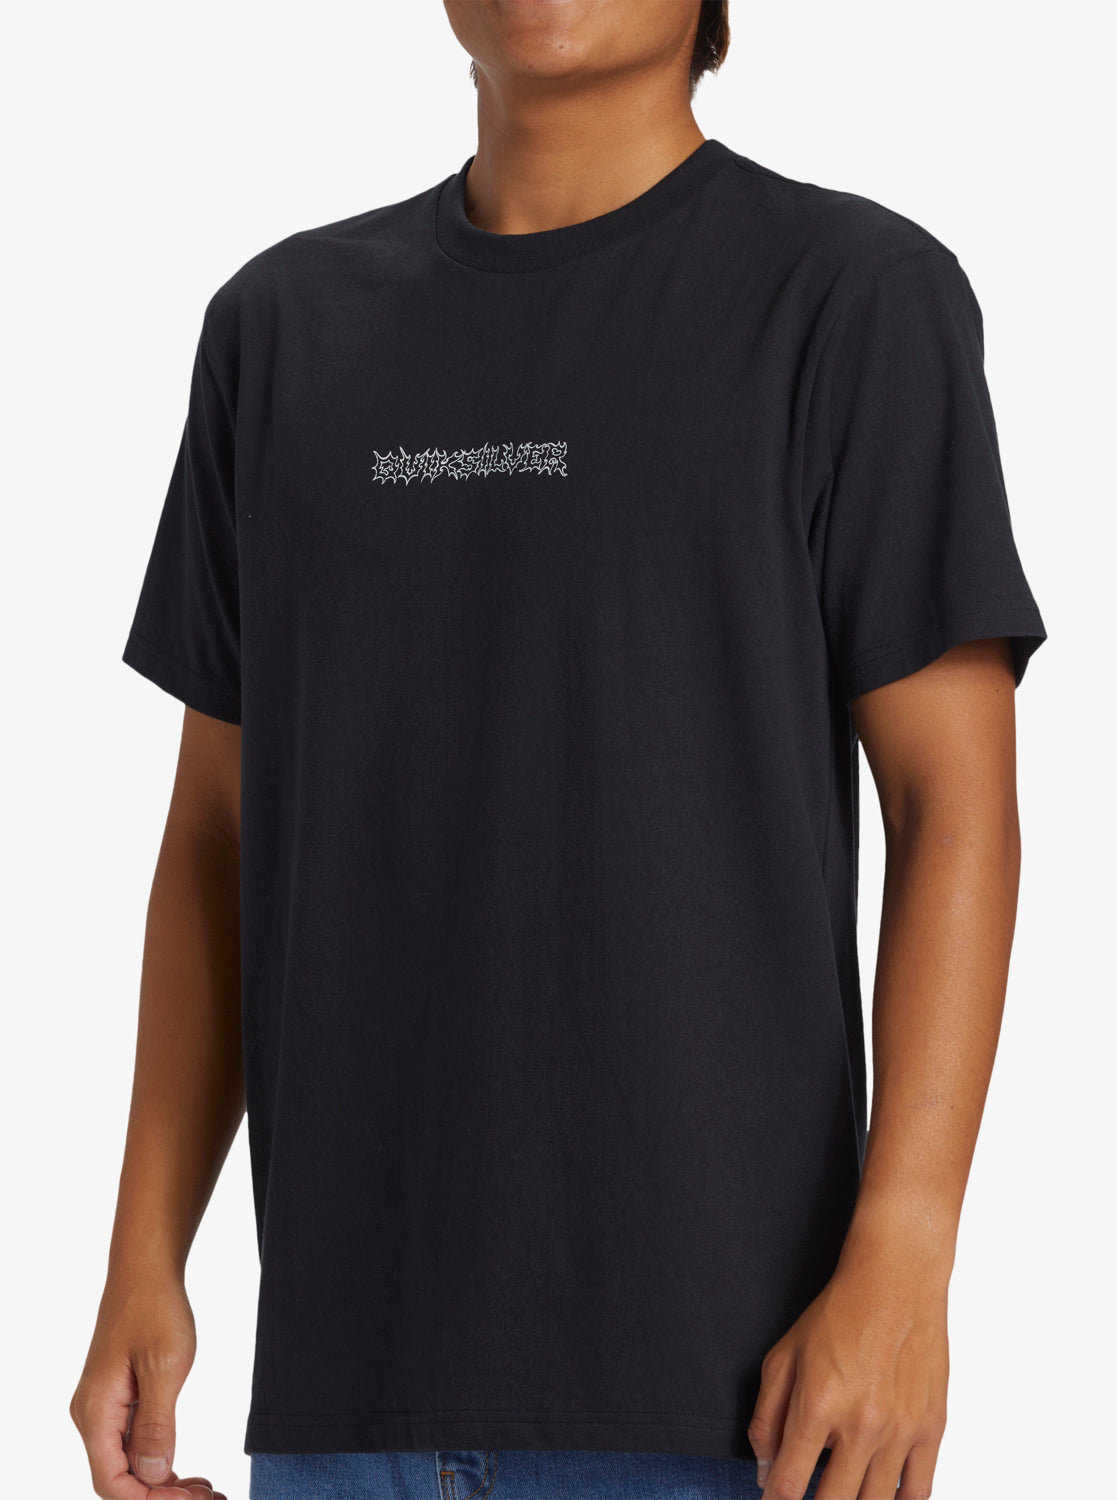 Razor Short Sleeve Saturn T-Shirt - Black